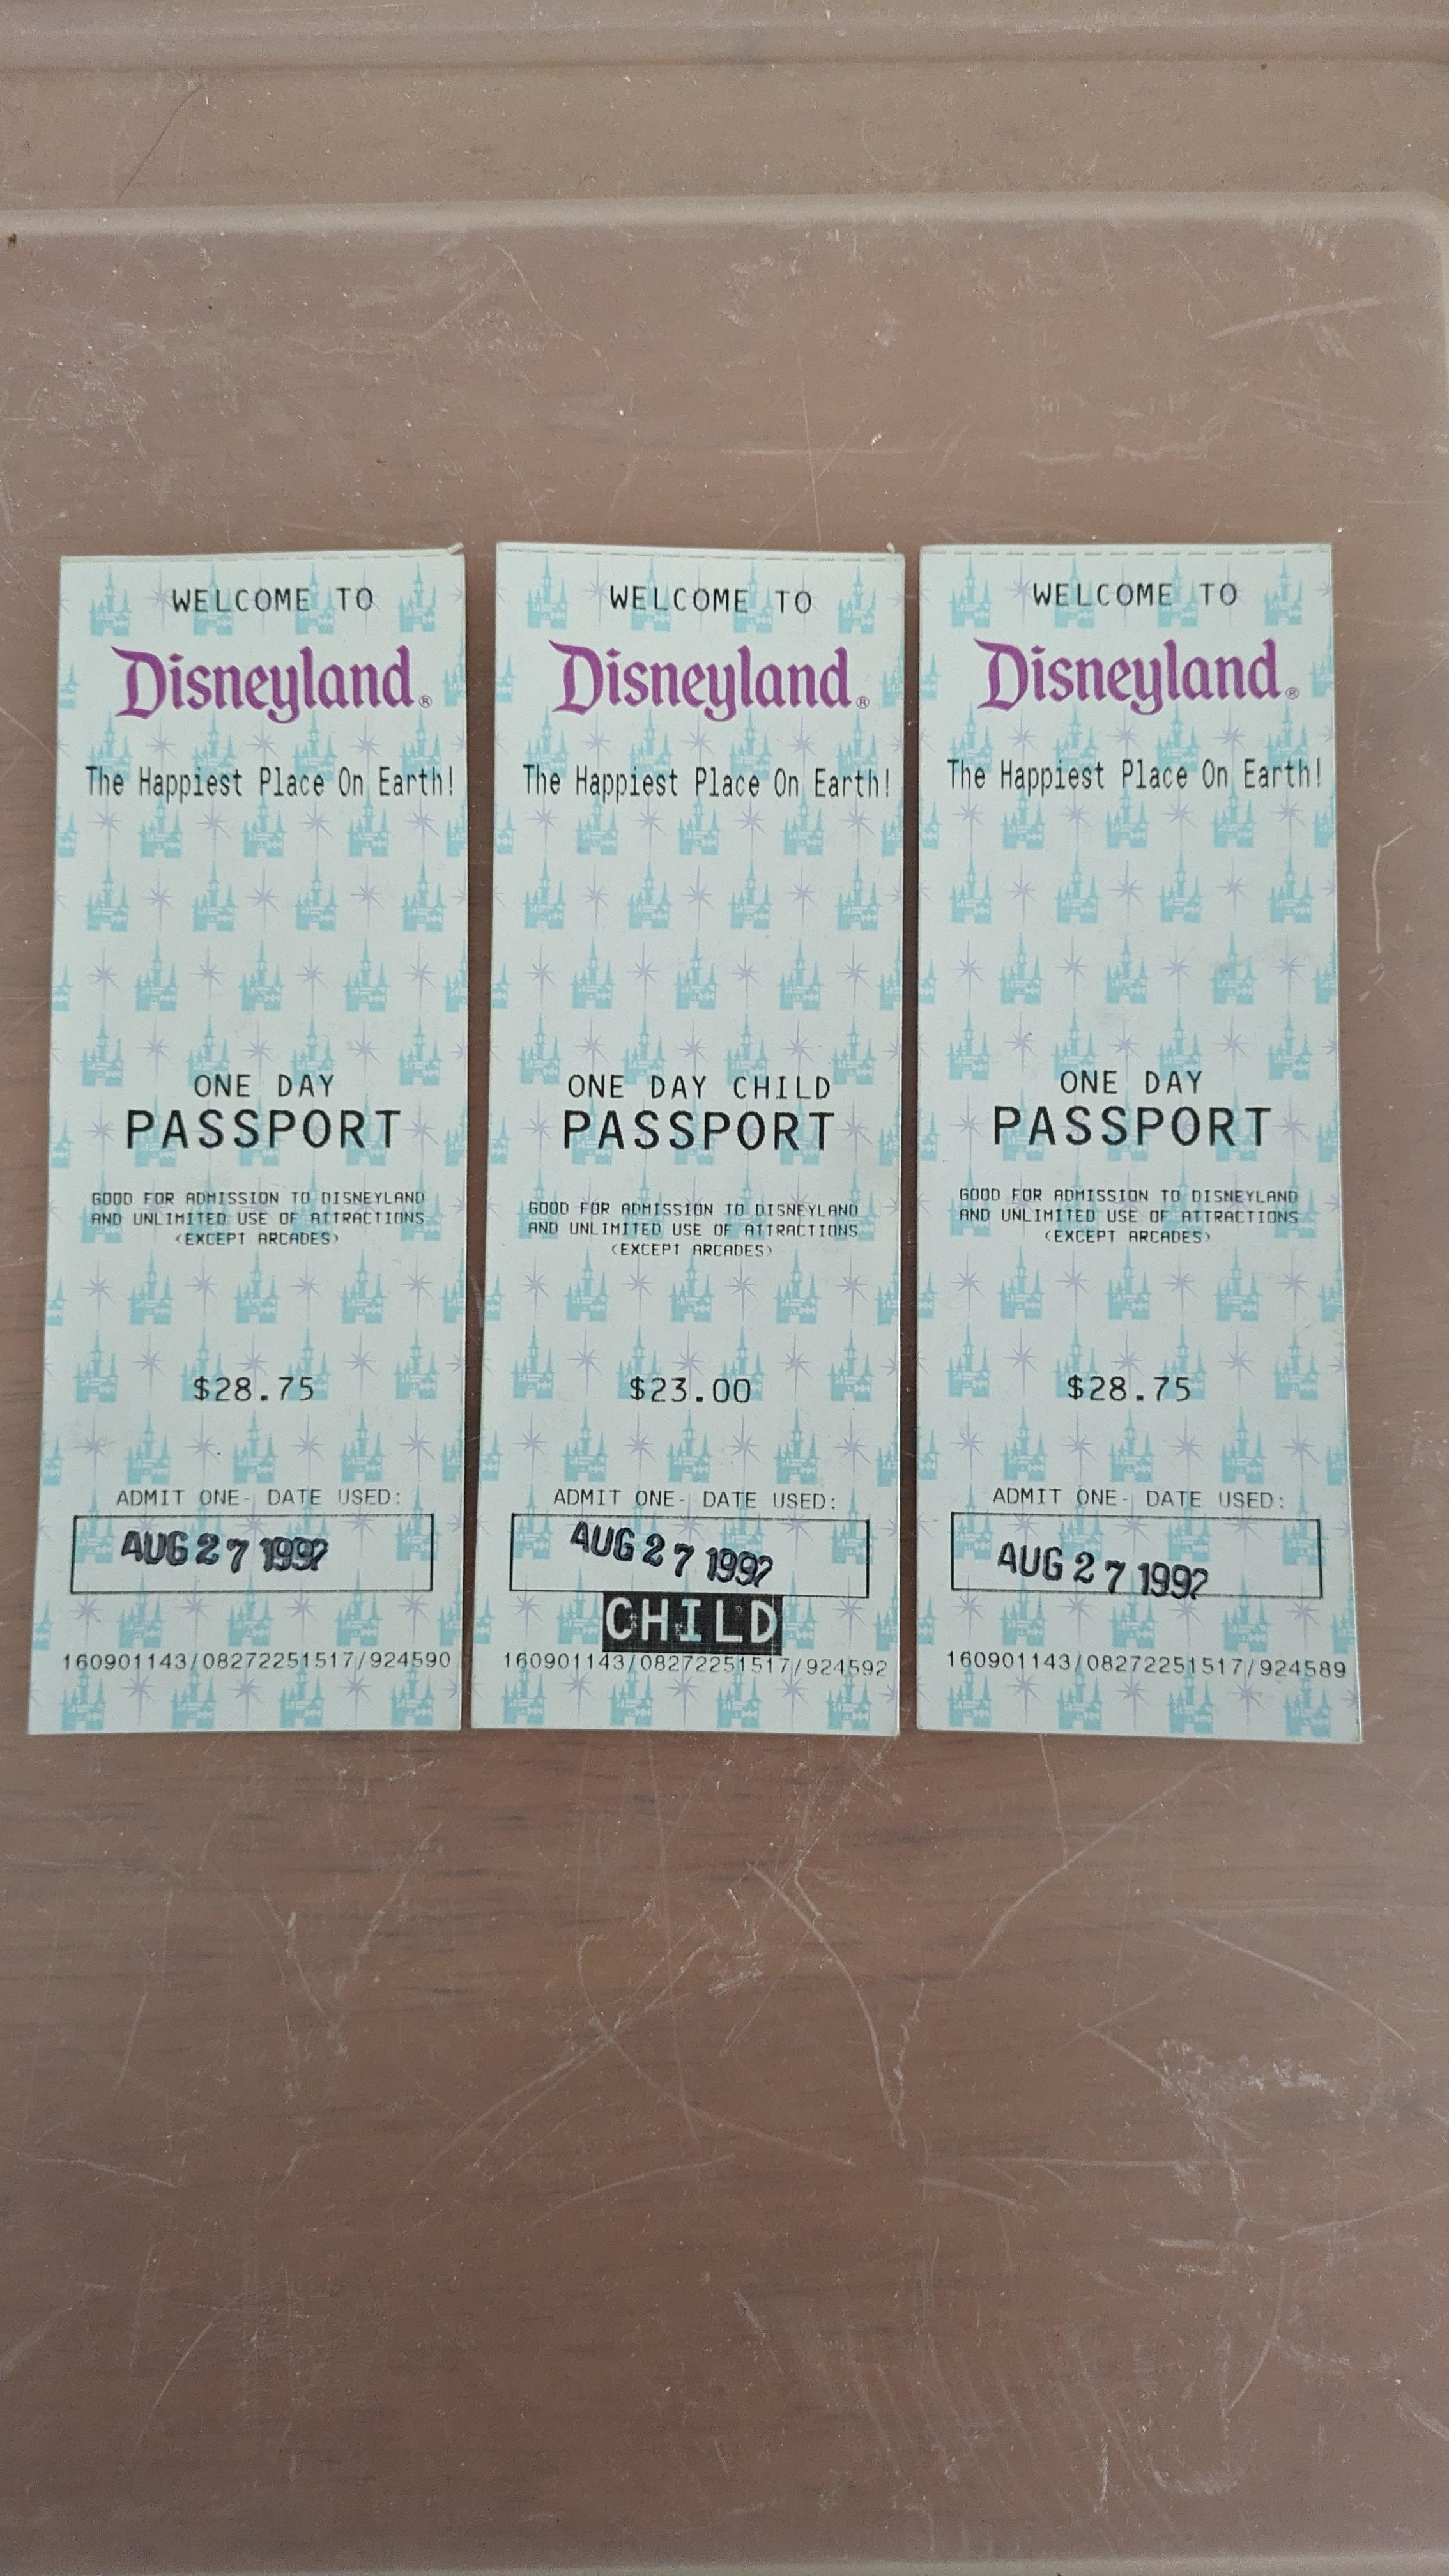 Three vintage Disneyland passports displayed on a surface, dated August 27, 1989